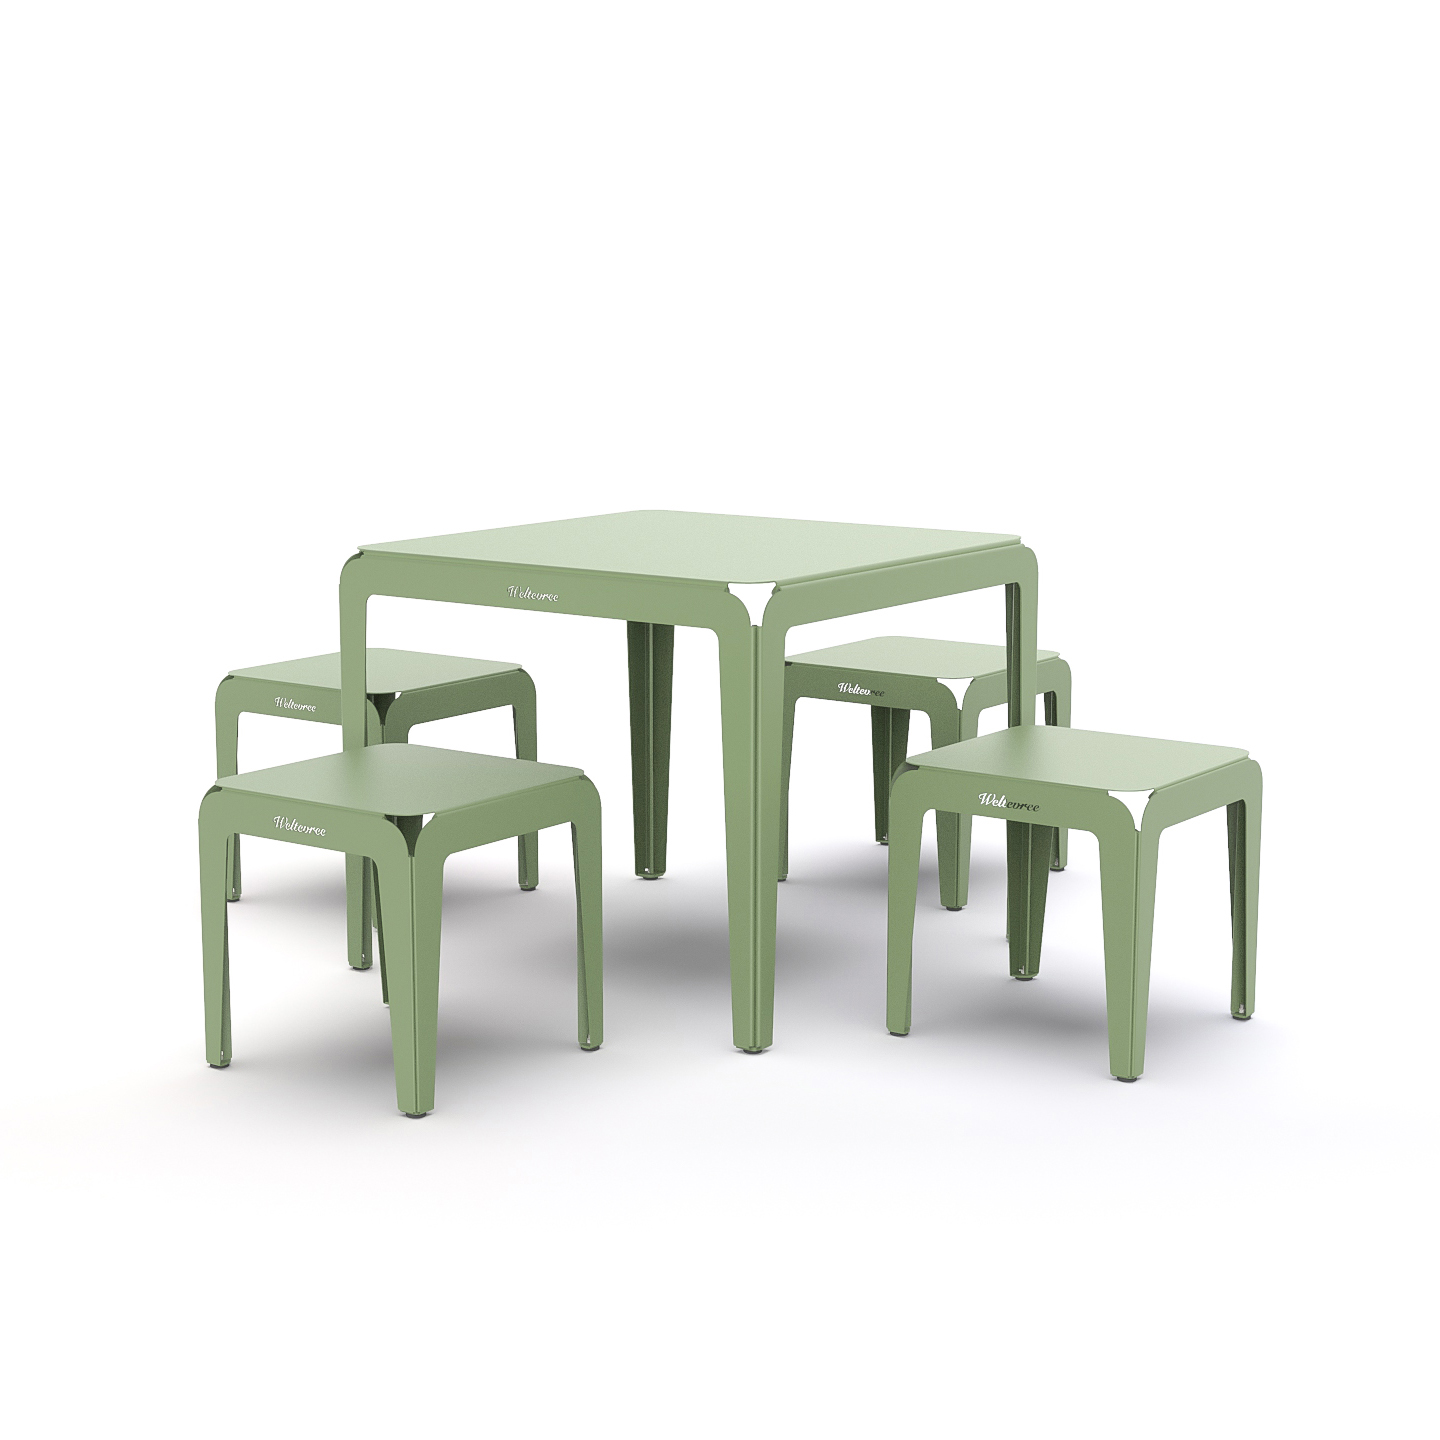 Weltevree-green-bended-table-stool-studio